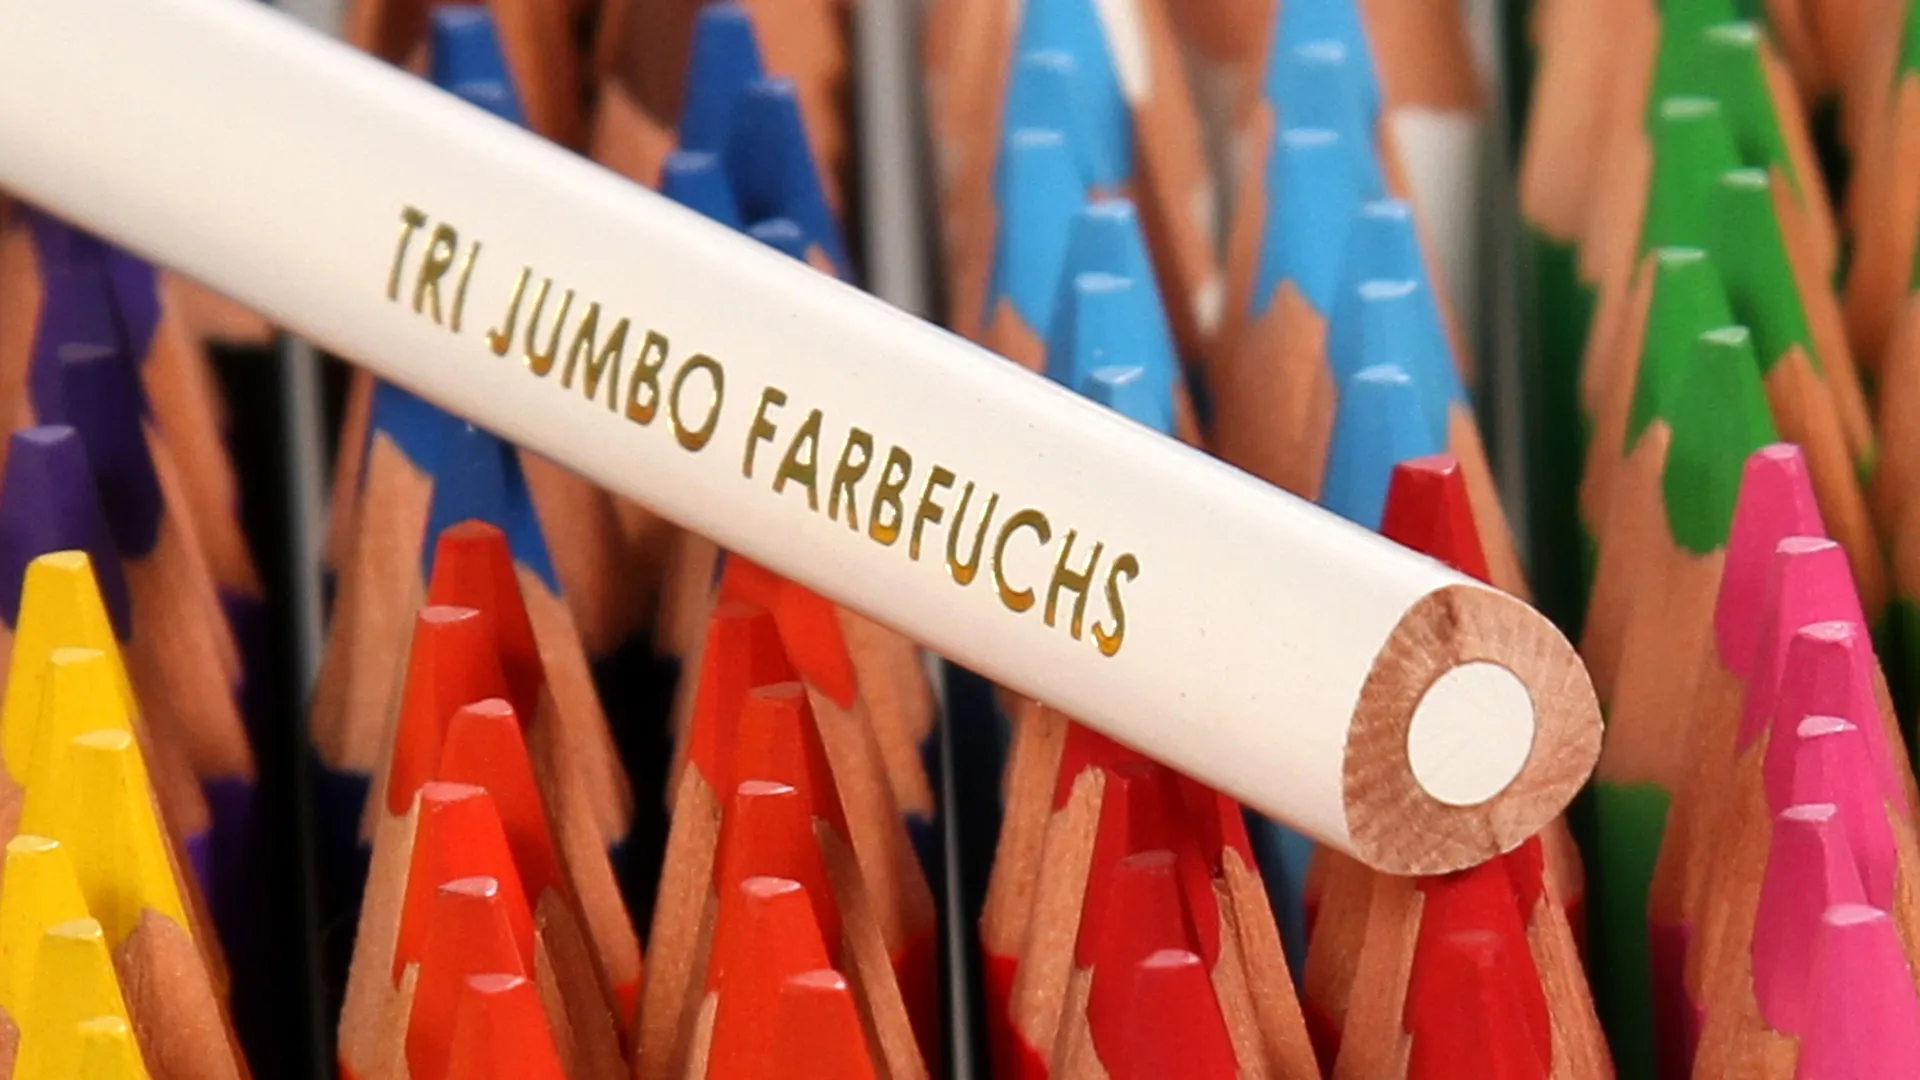 Buntstifte "Tri Jumbo Farbfuchs" 144er Set